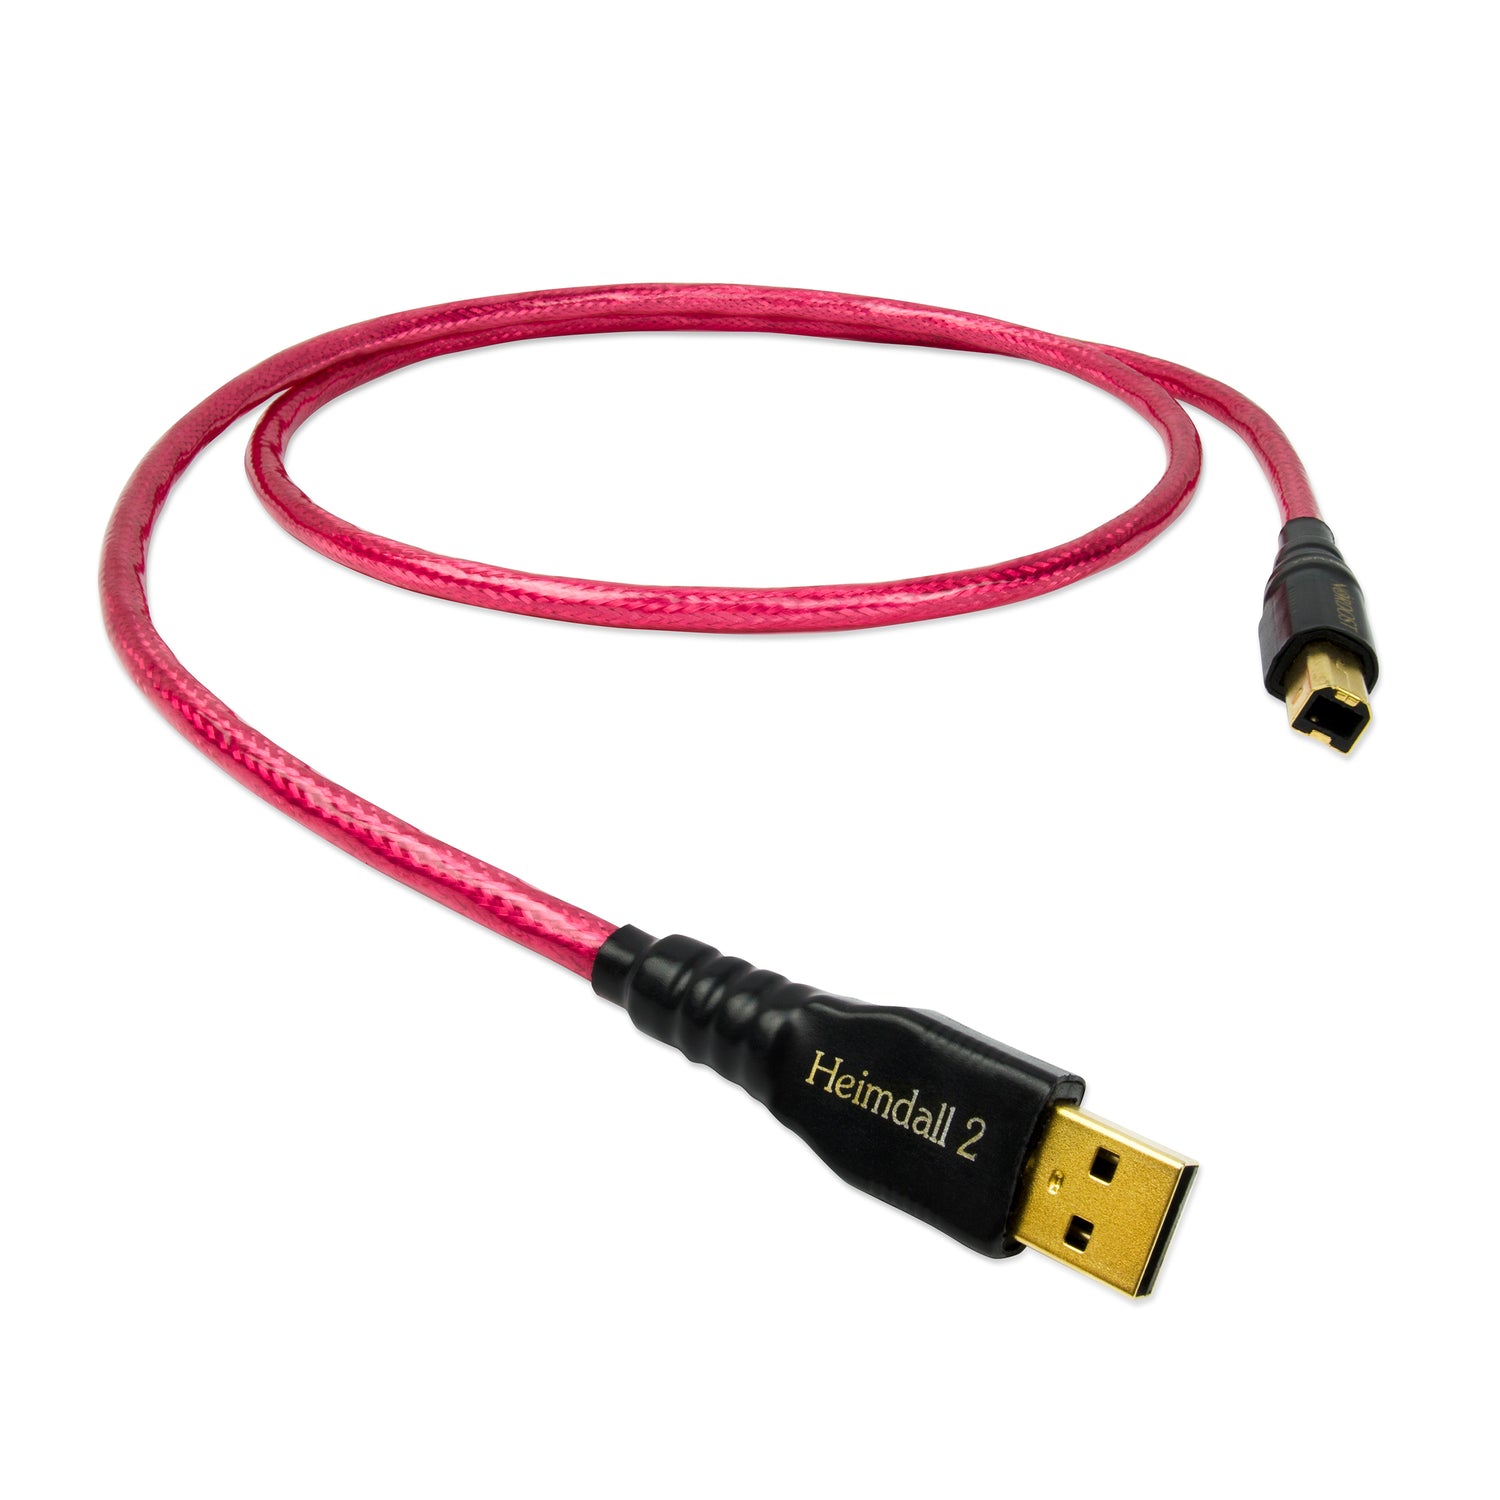 Heimdall 2 USB Cable